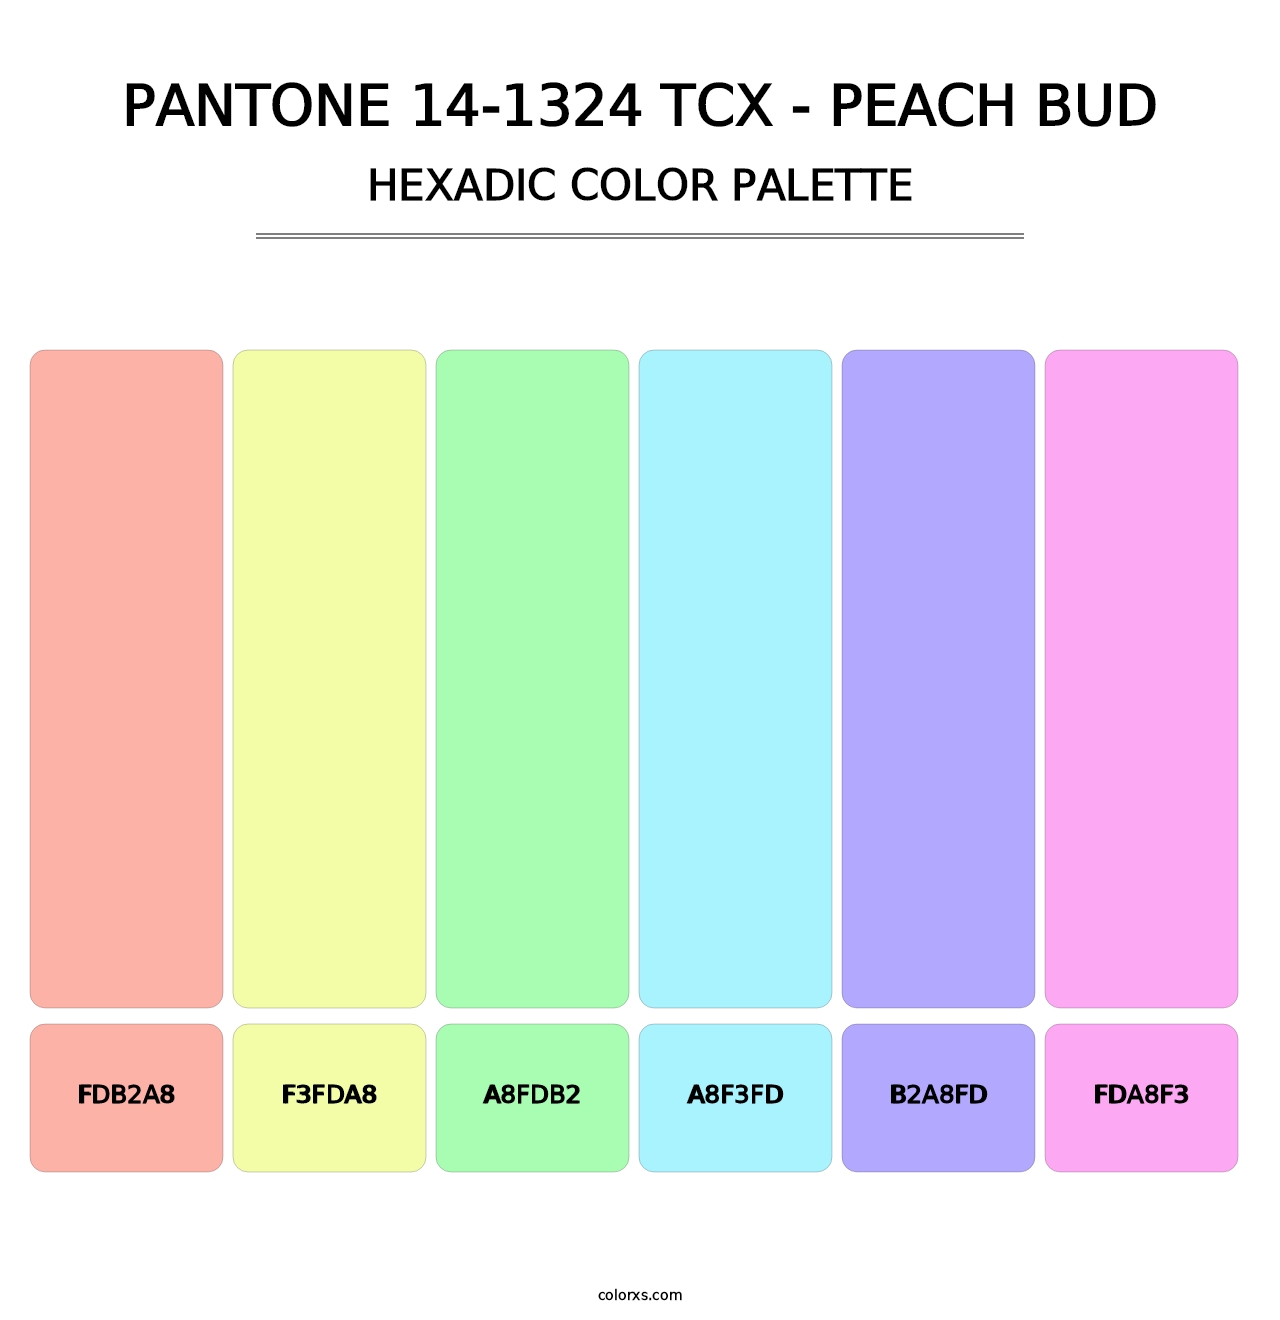 PANTONE 14-1324 TCX - Peach Bud - Hexadic Color Palette